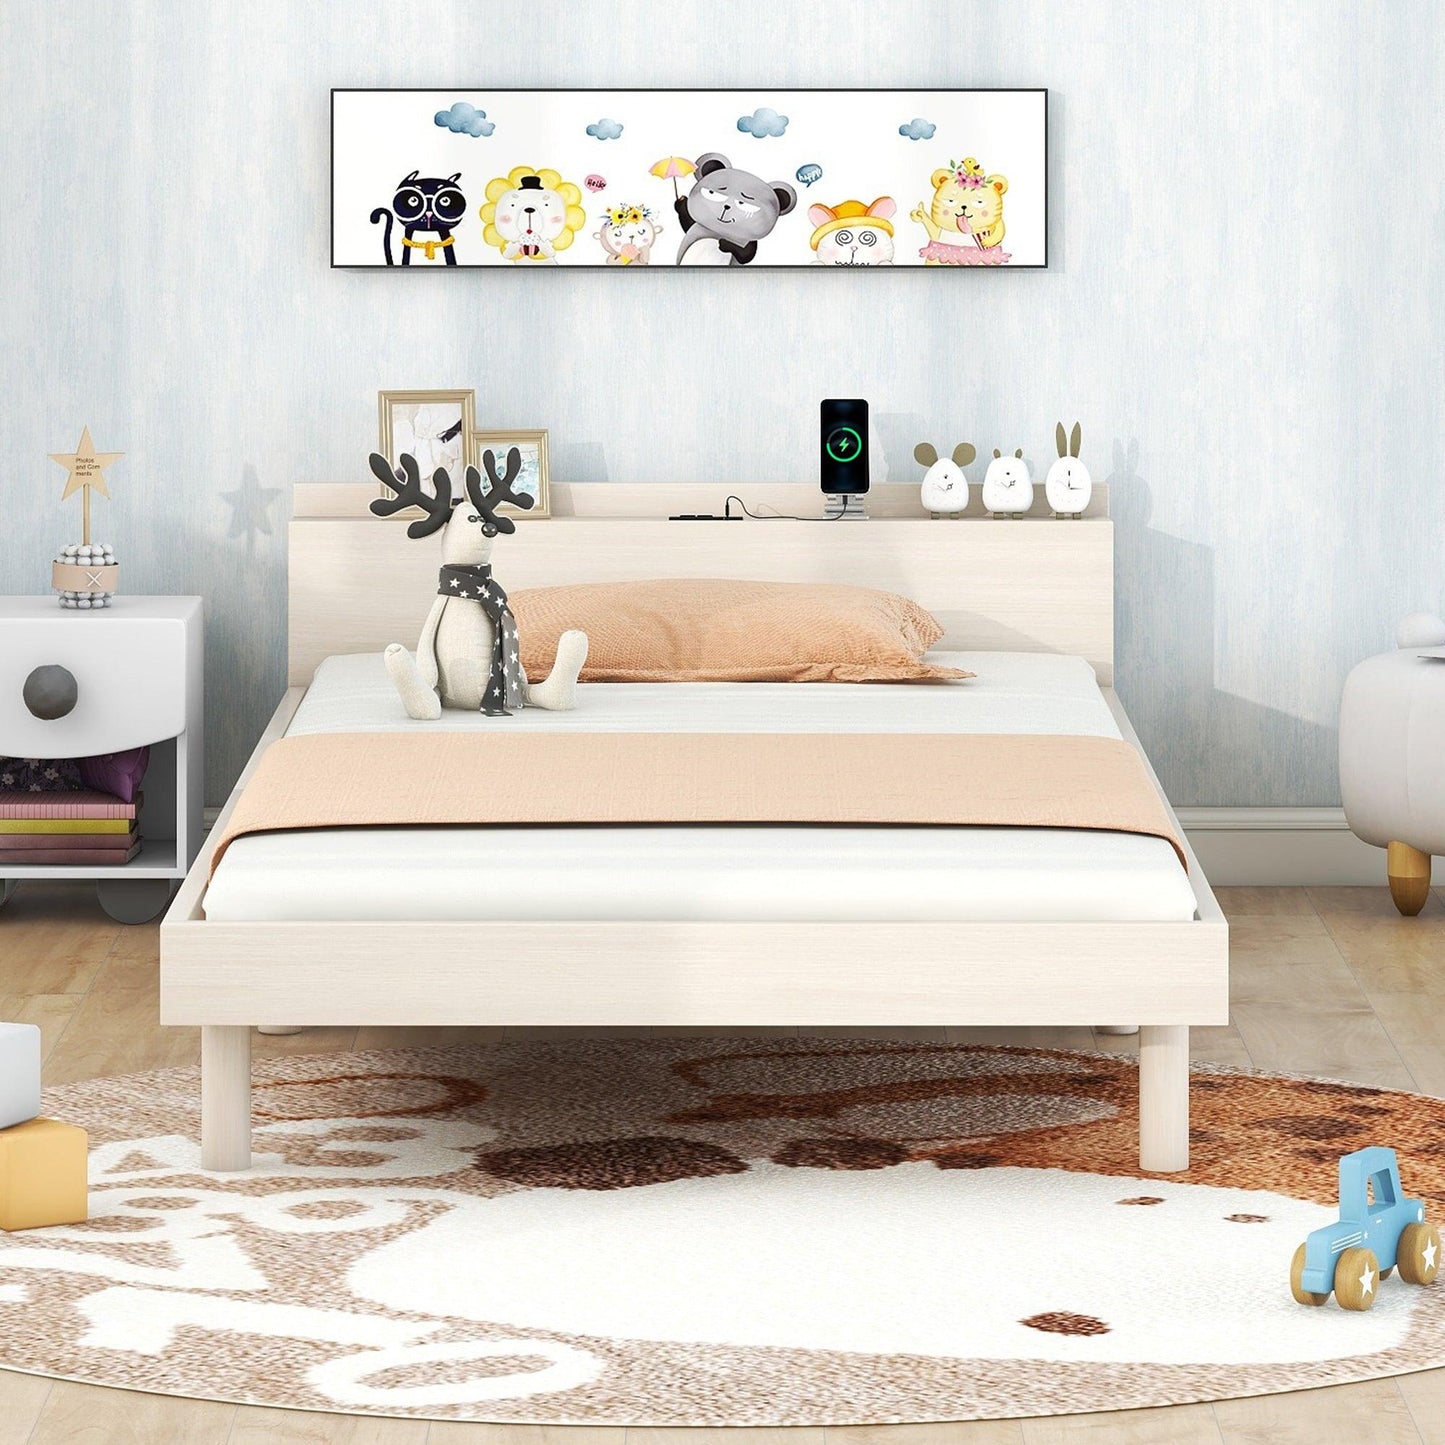 Modern Design Twin Size Platform Bed Frame with Built-in USB Ports for White Washed Color - FurniFindUSA